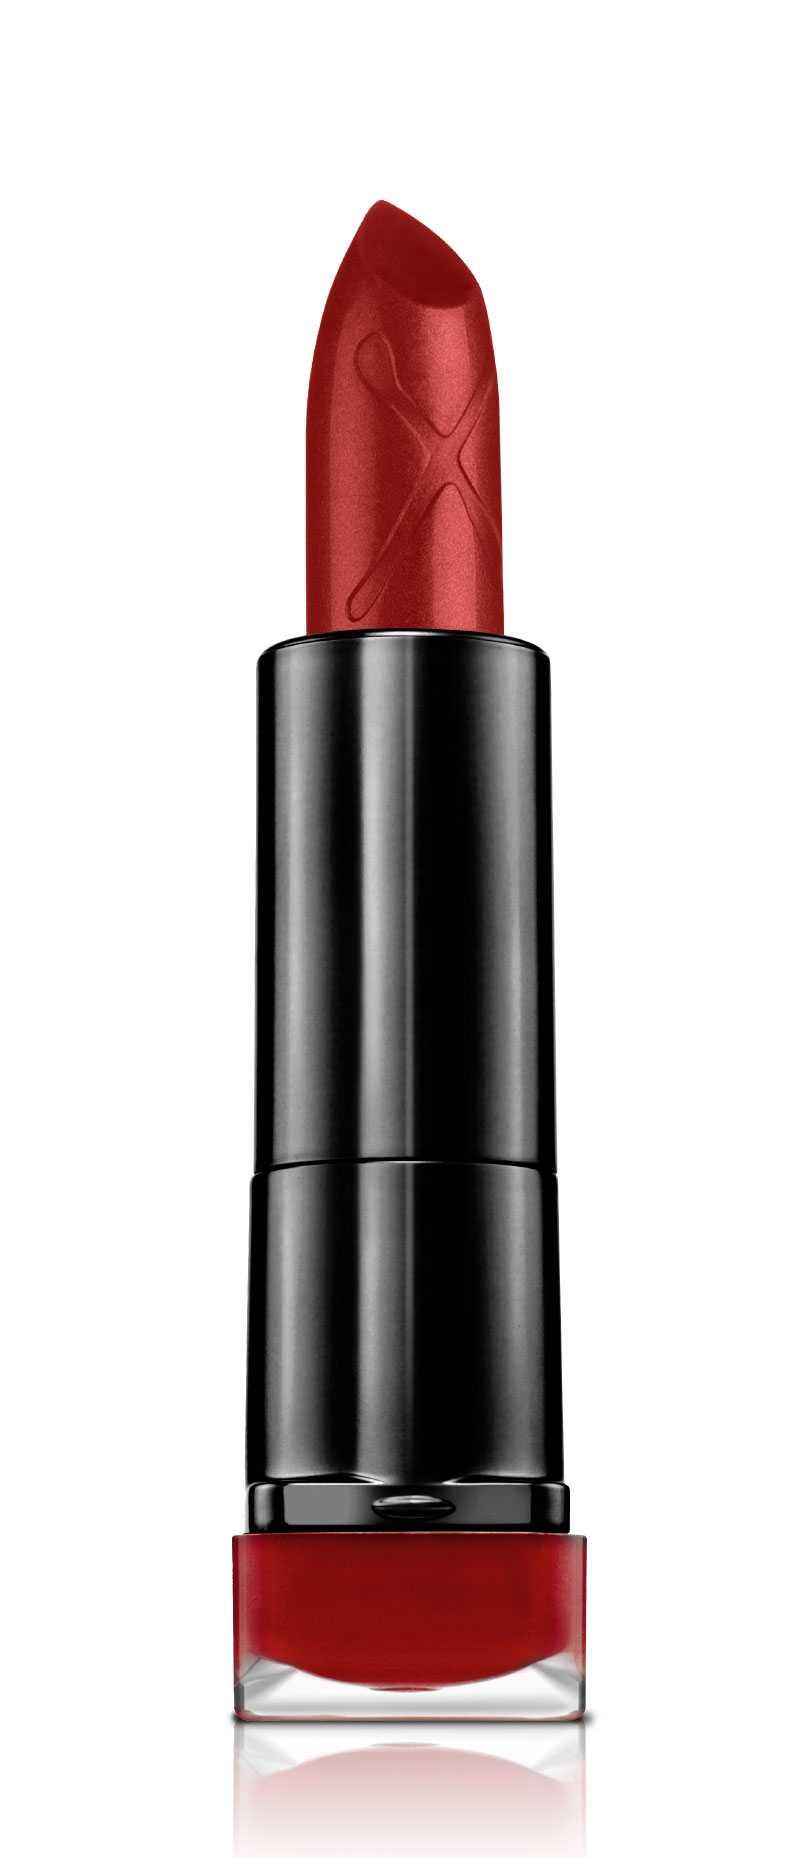 082117 balmain loreal lipstick lead